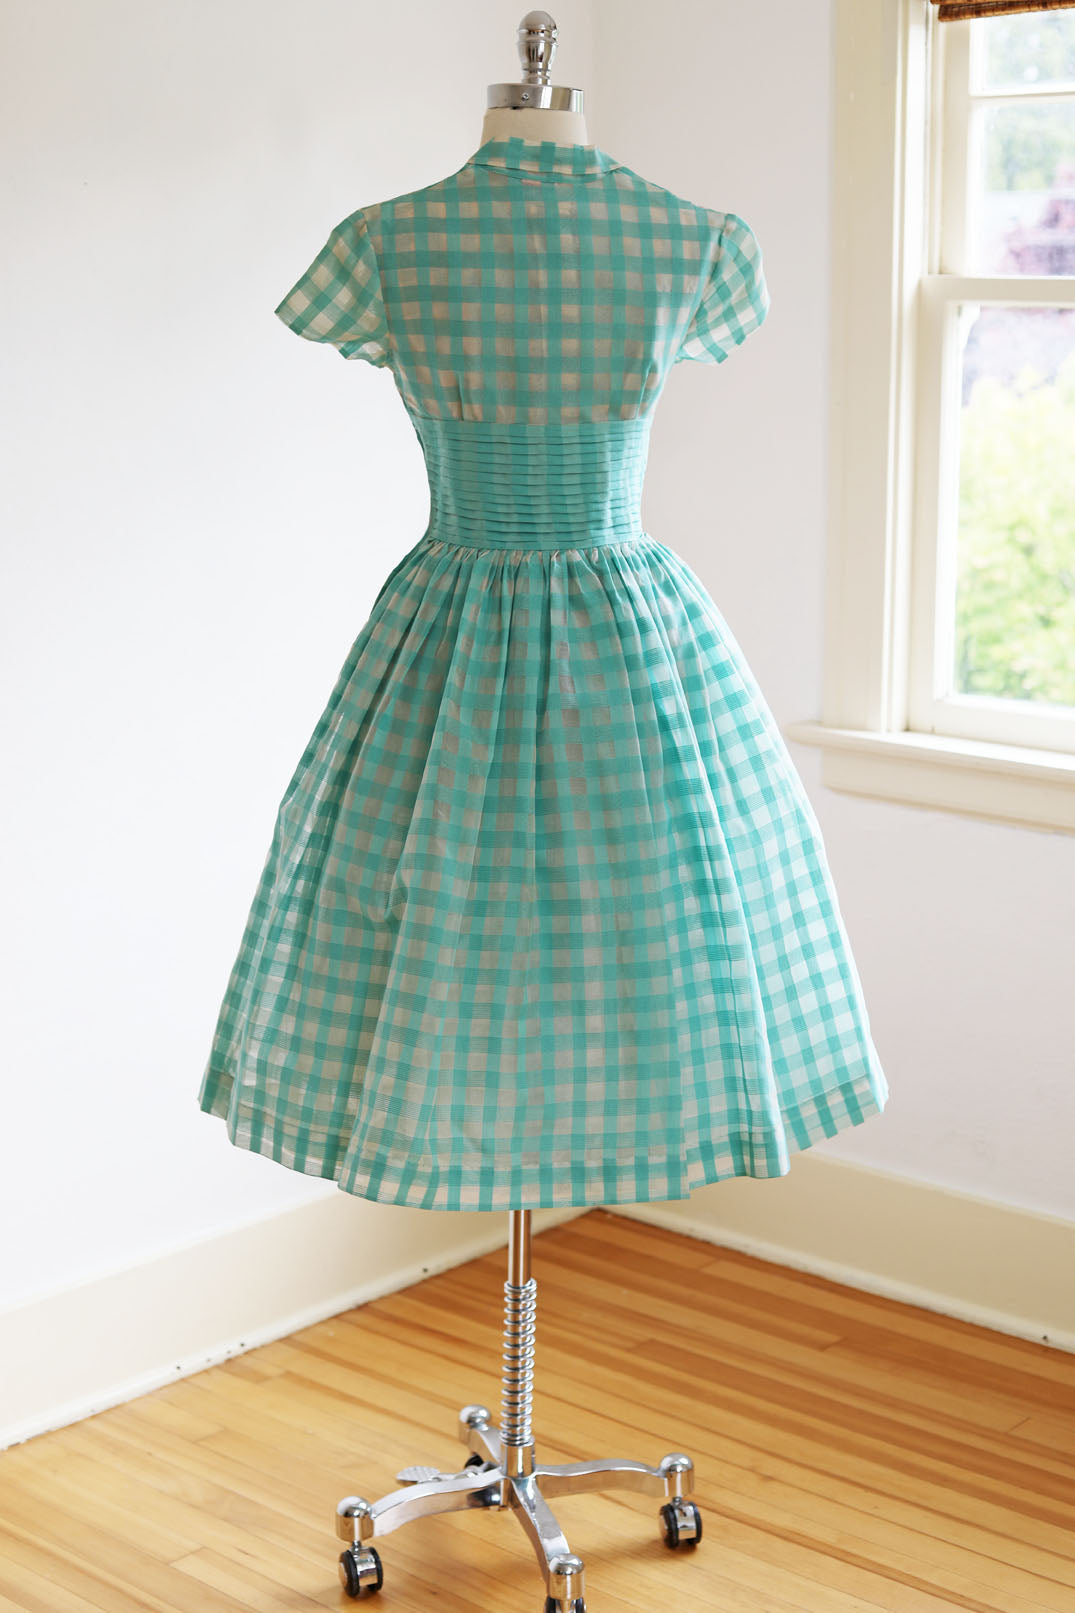 Vintage 1950s Dress - DARLING Mint Green Plaid Organdy Party Shirtwaist Frock w Rhinestones Junior Size XS - S